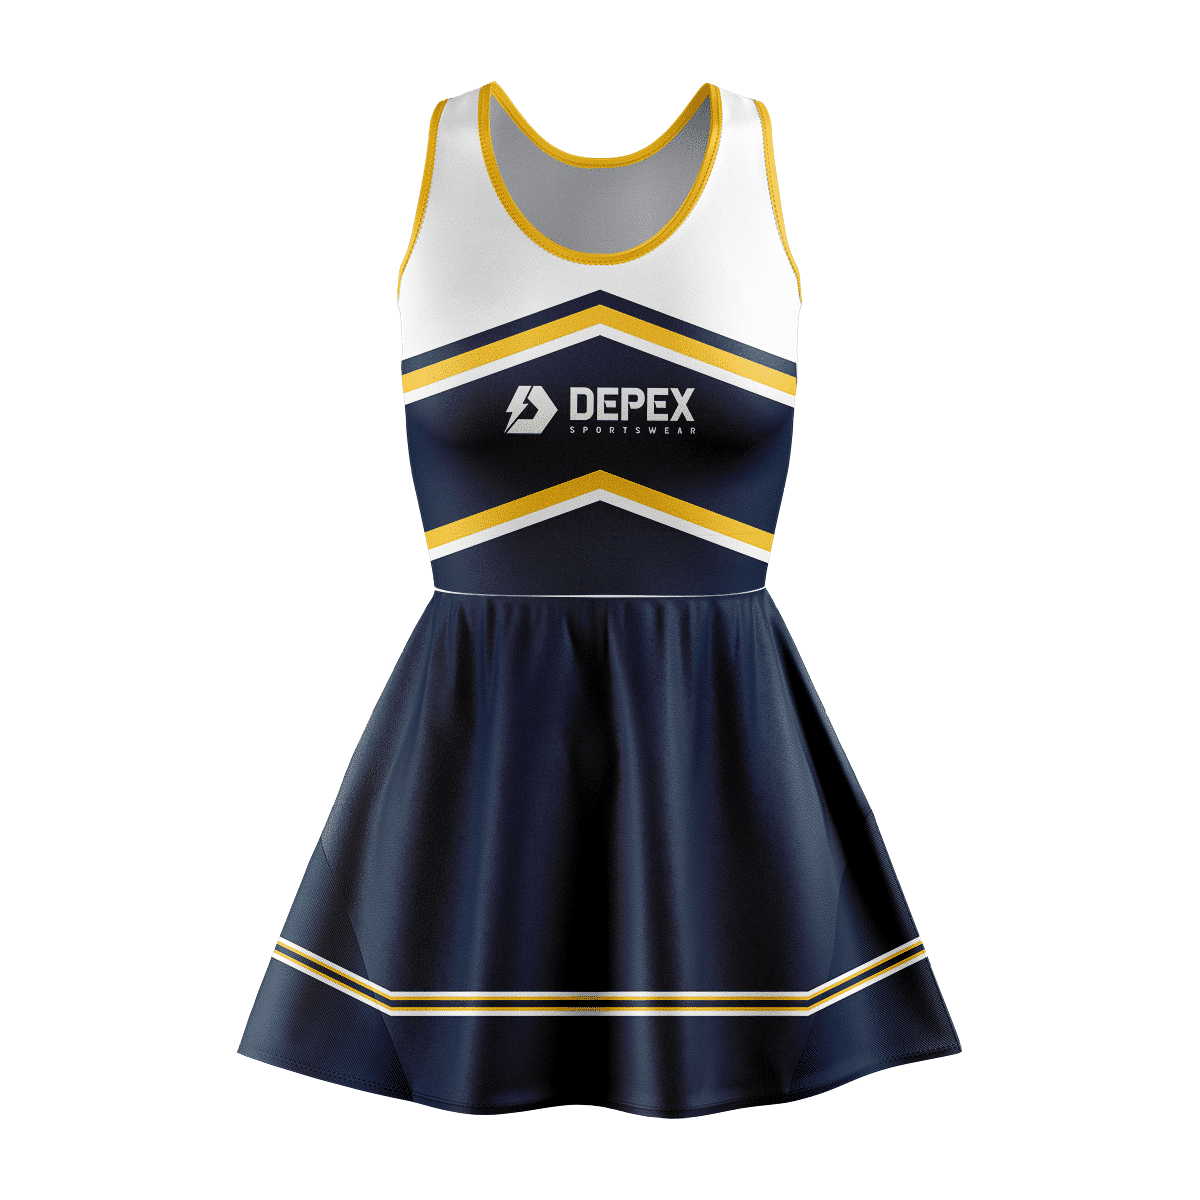 Buy Premium Custom Cheerleading Uniforms by DEPEX Sportswear